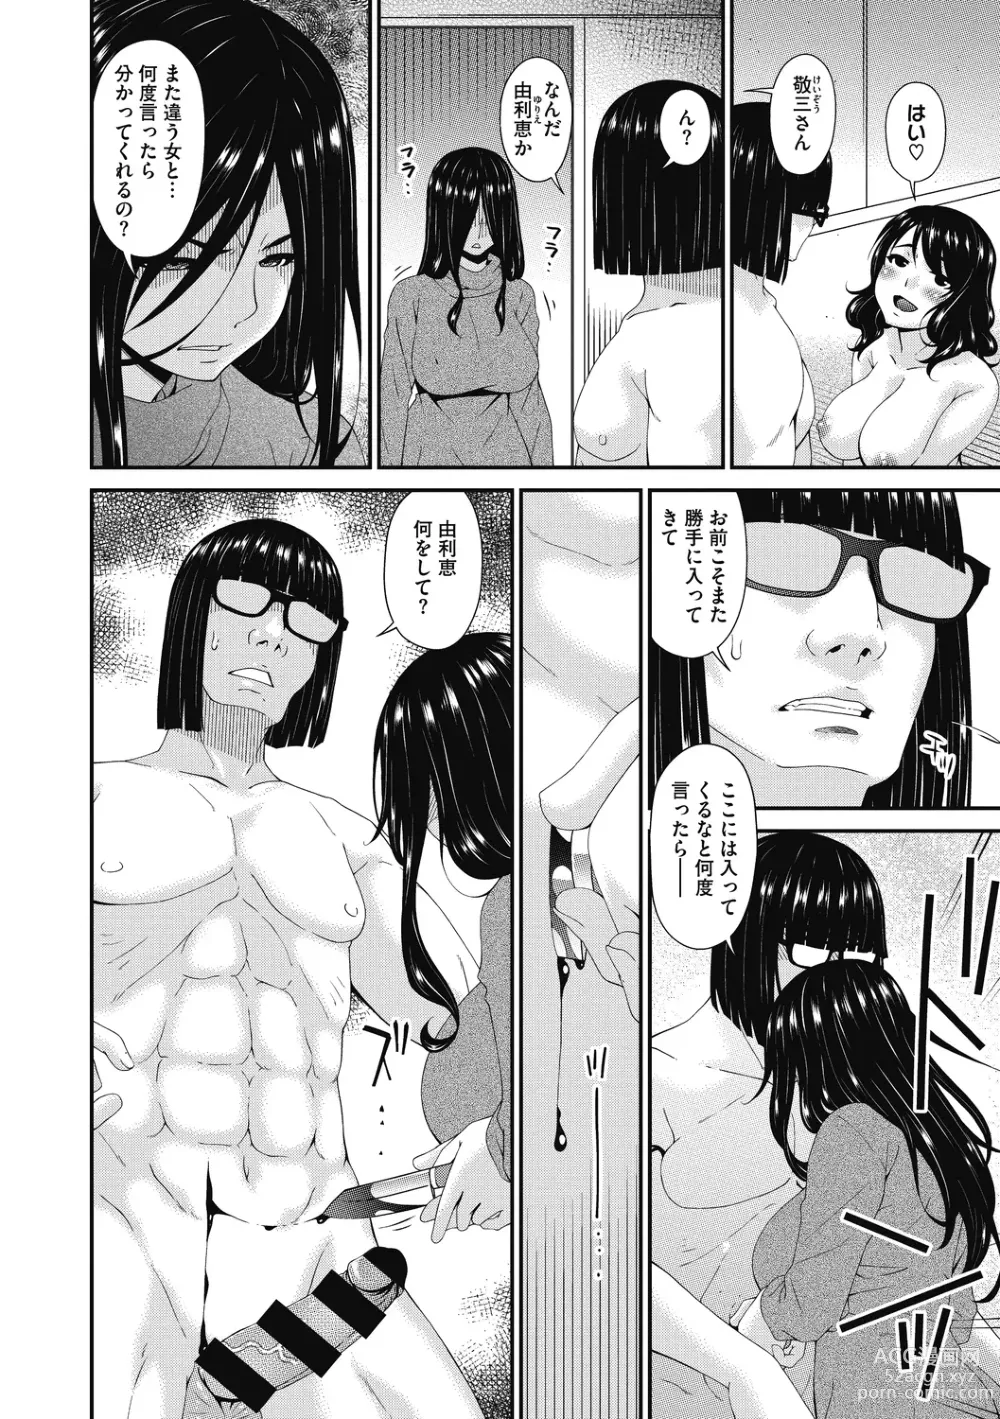 Page 190 of manga Doukoku no Ori